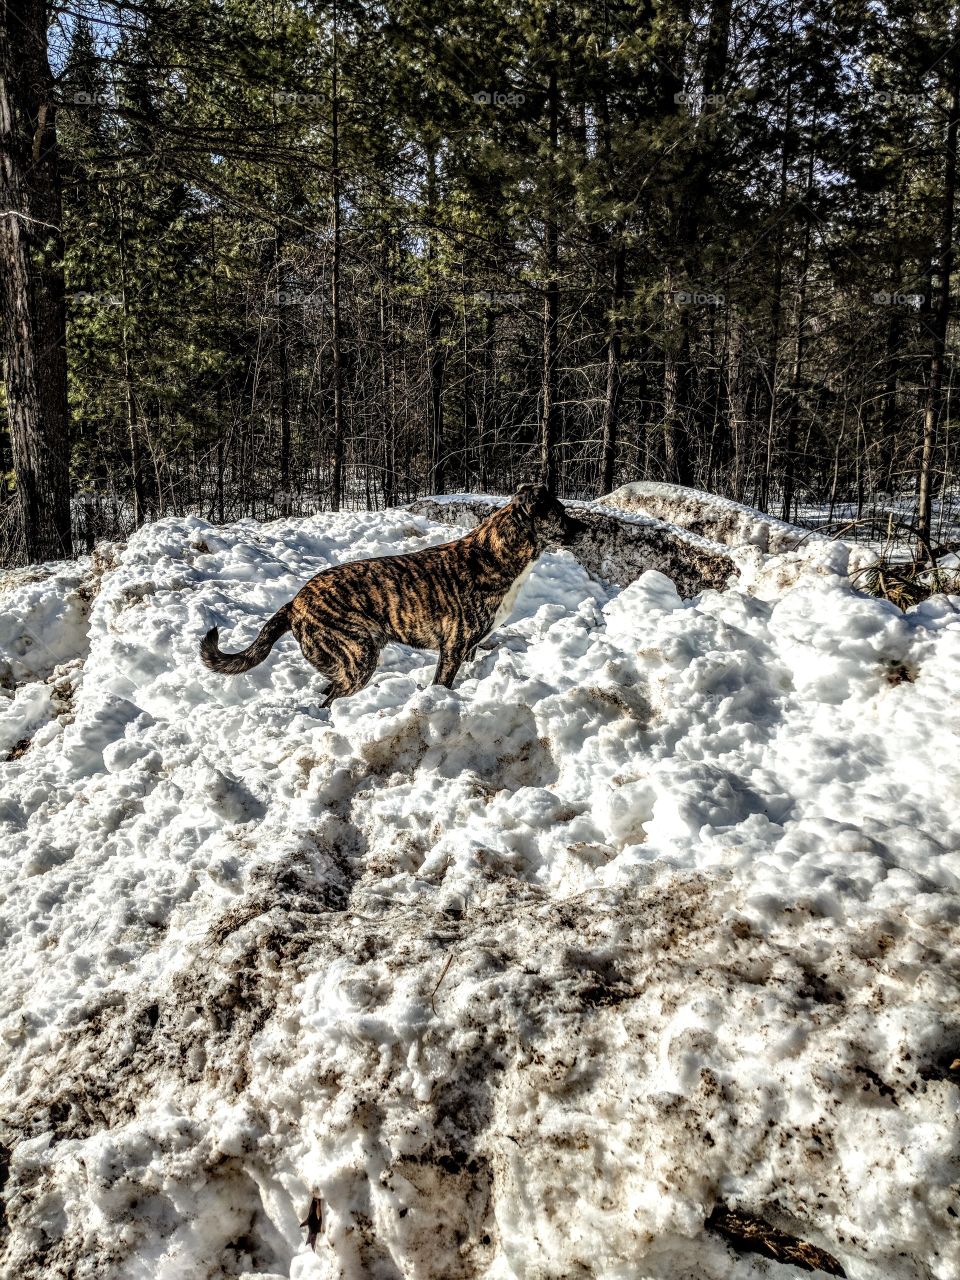 tiger striped dog utilizing large snow bank for his patrol duties